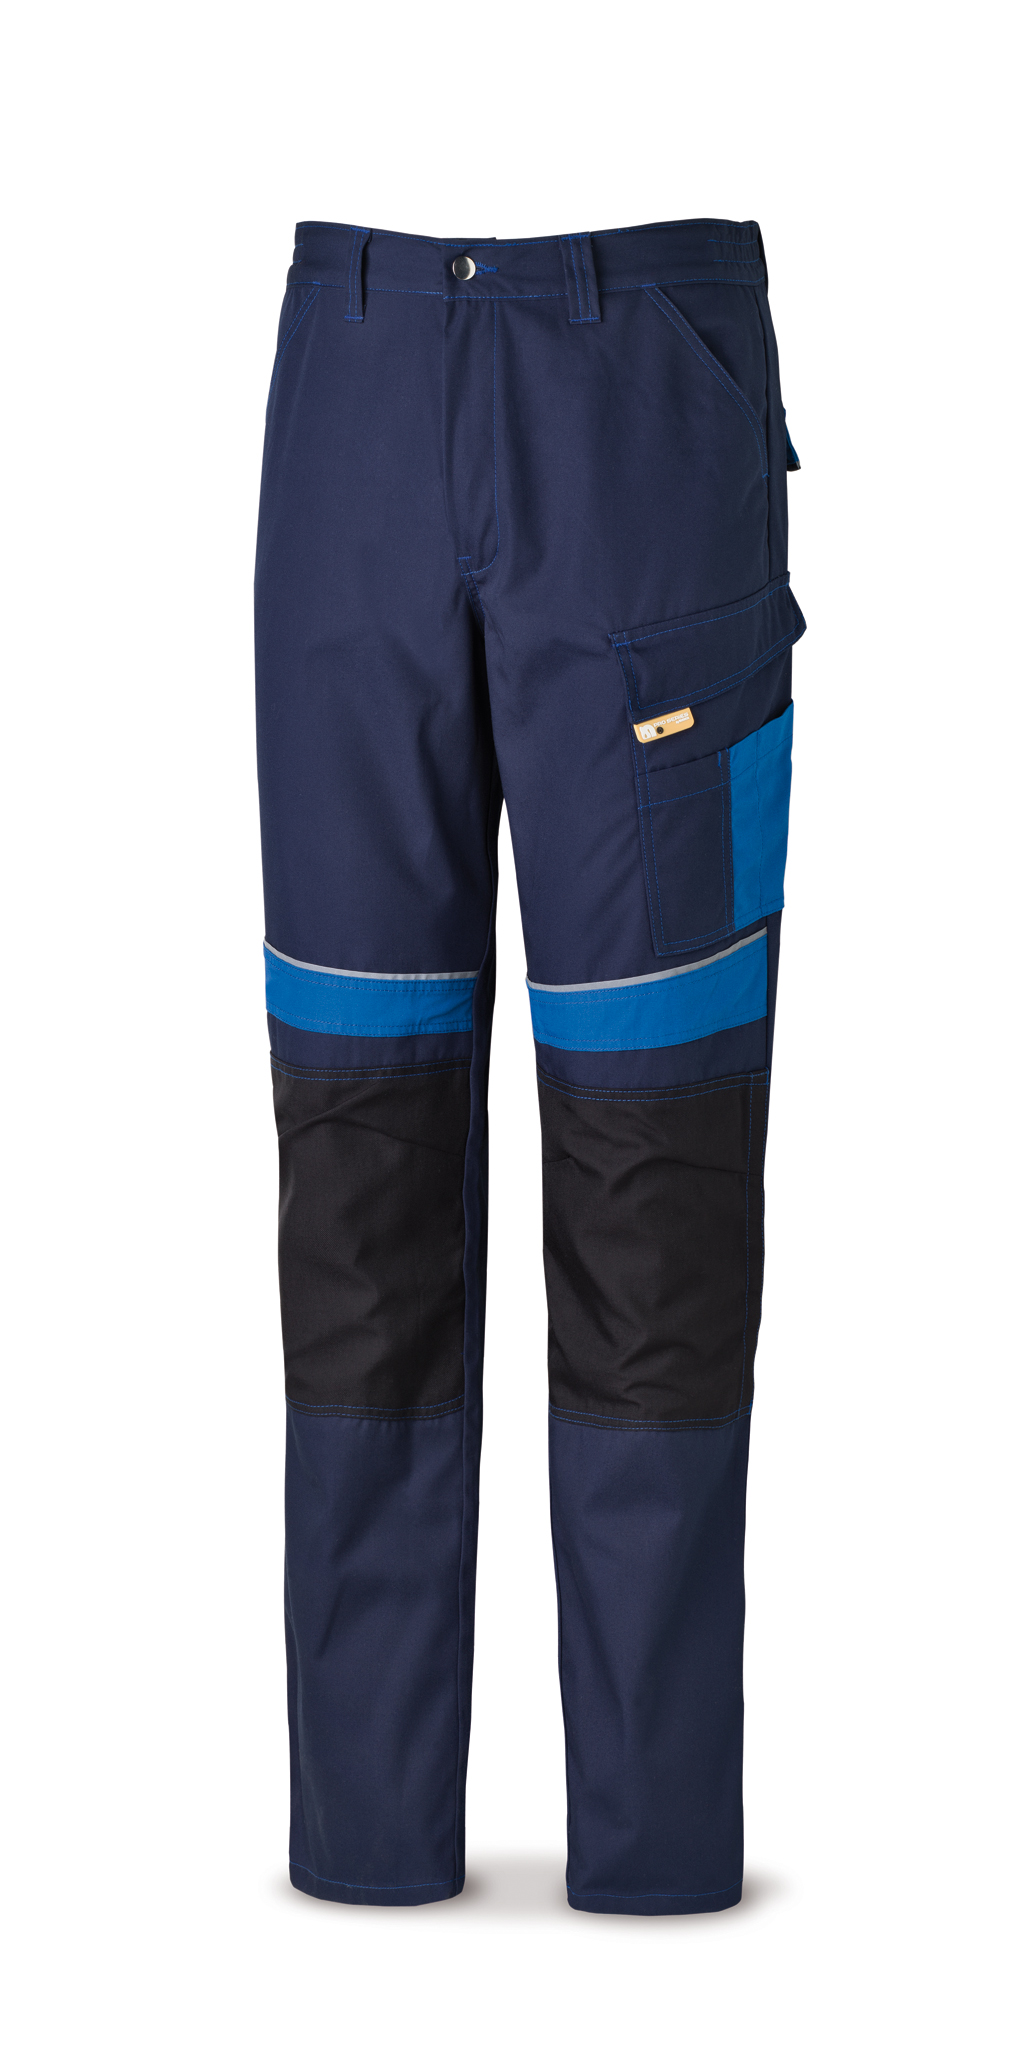 588-PAZA Vetements de travail laboral Pro Series Pantalon toile tergal 245 g. Coloris bleu marine/bleu roi